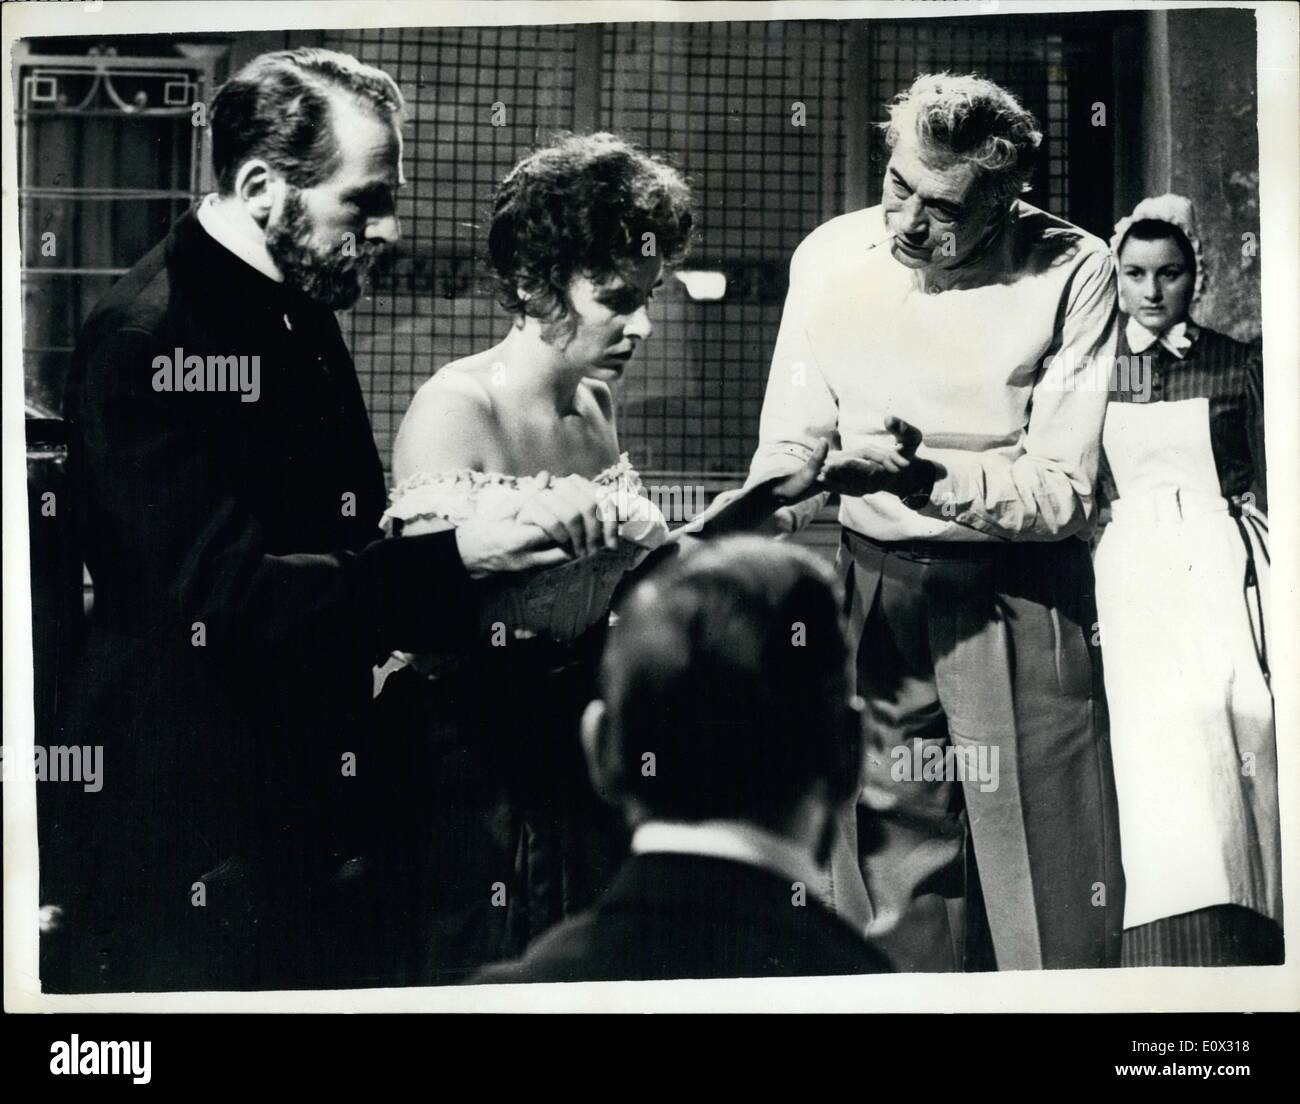 Jan. 01, 1965 - Actual hypnotism used for filming dramatic scenes from Ã¢â‚¬Å“FreudÃ¢â‚¬Â Ã¢â‚¬â€œ Actual hypnotism is used in Stock Photo